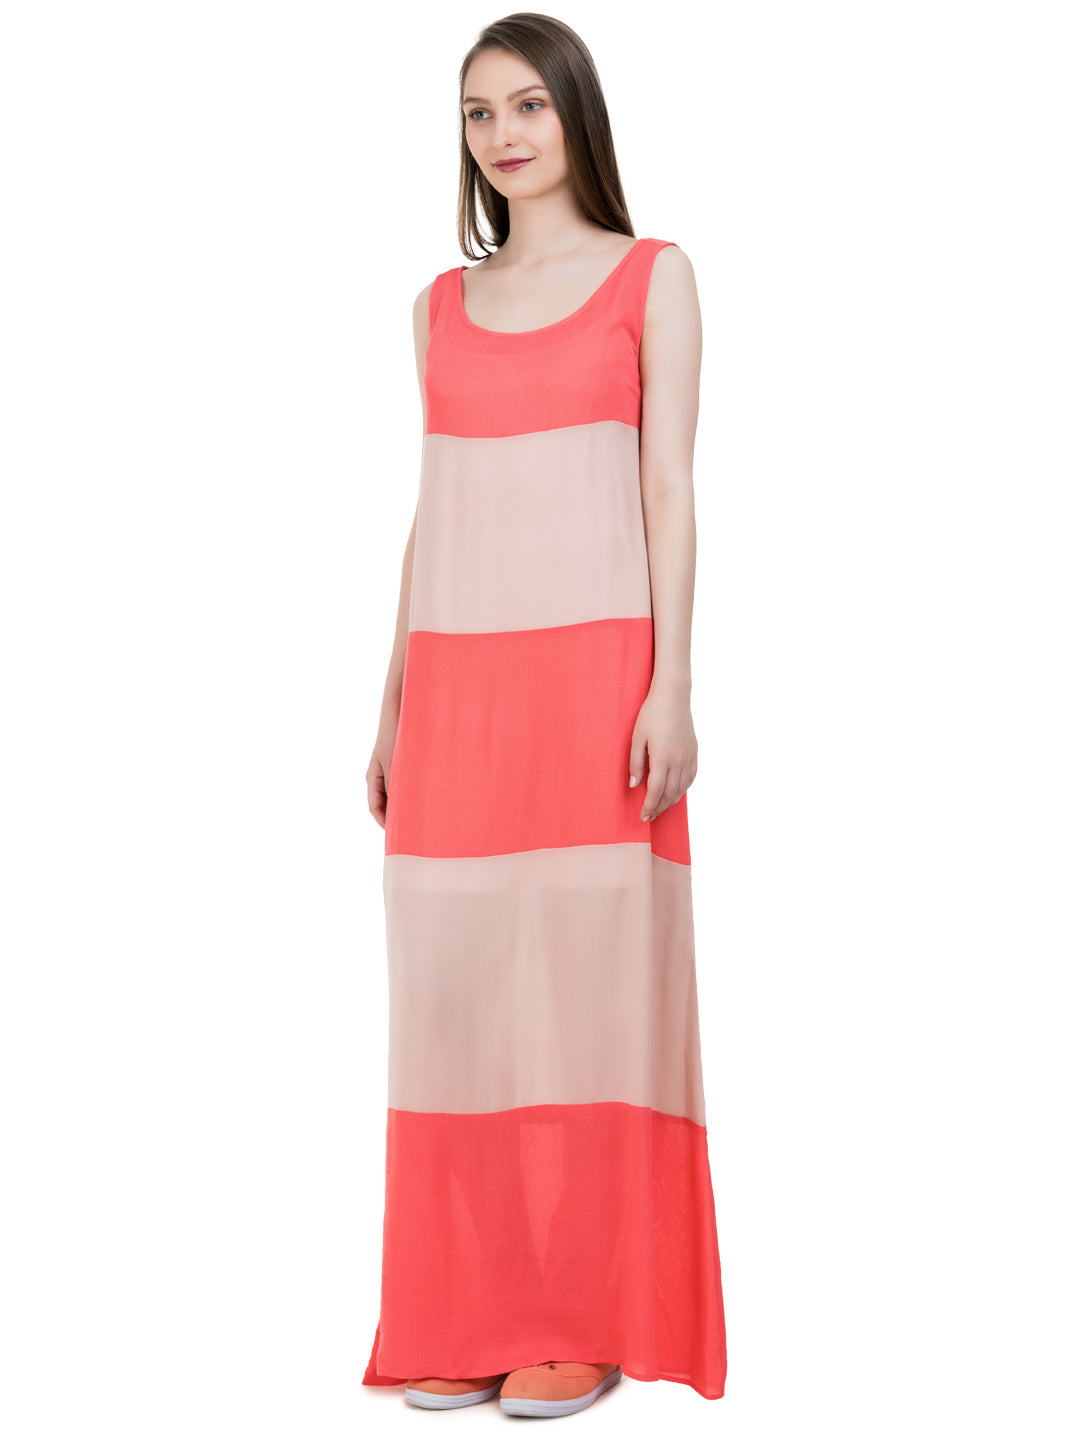 Coral colourblock dress